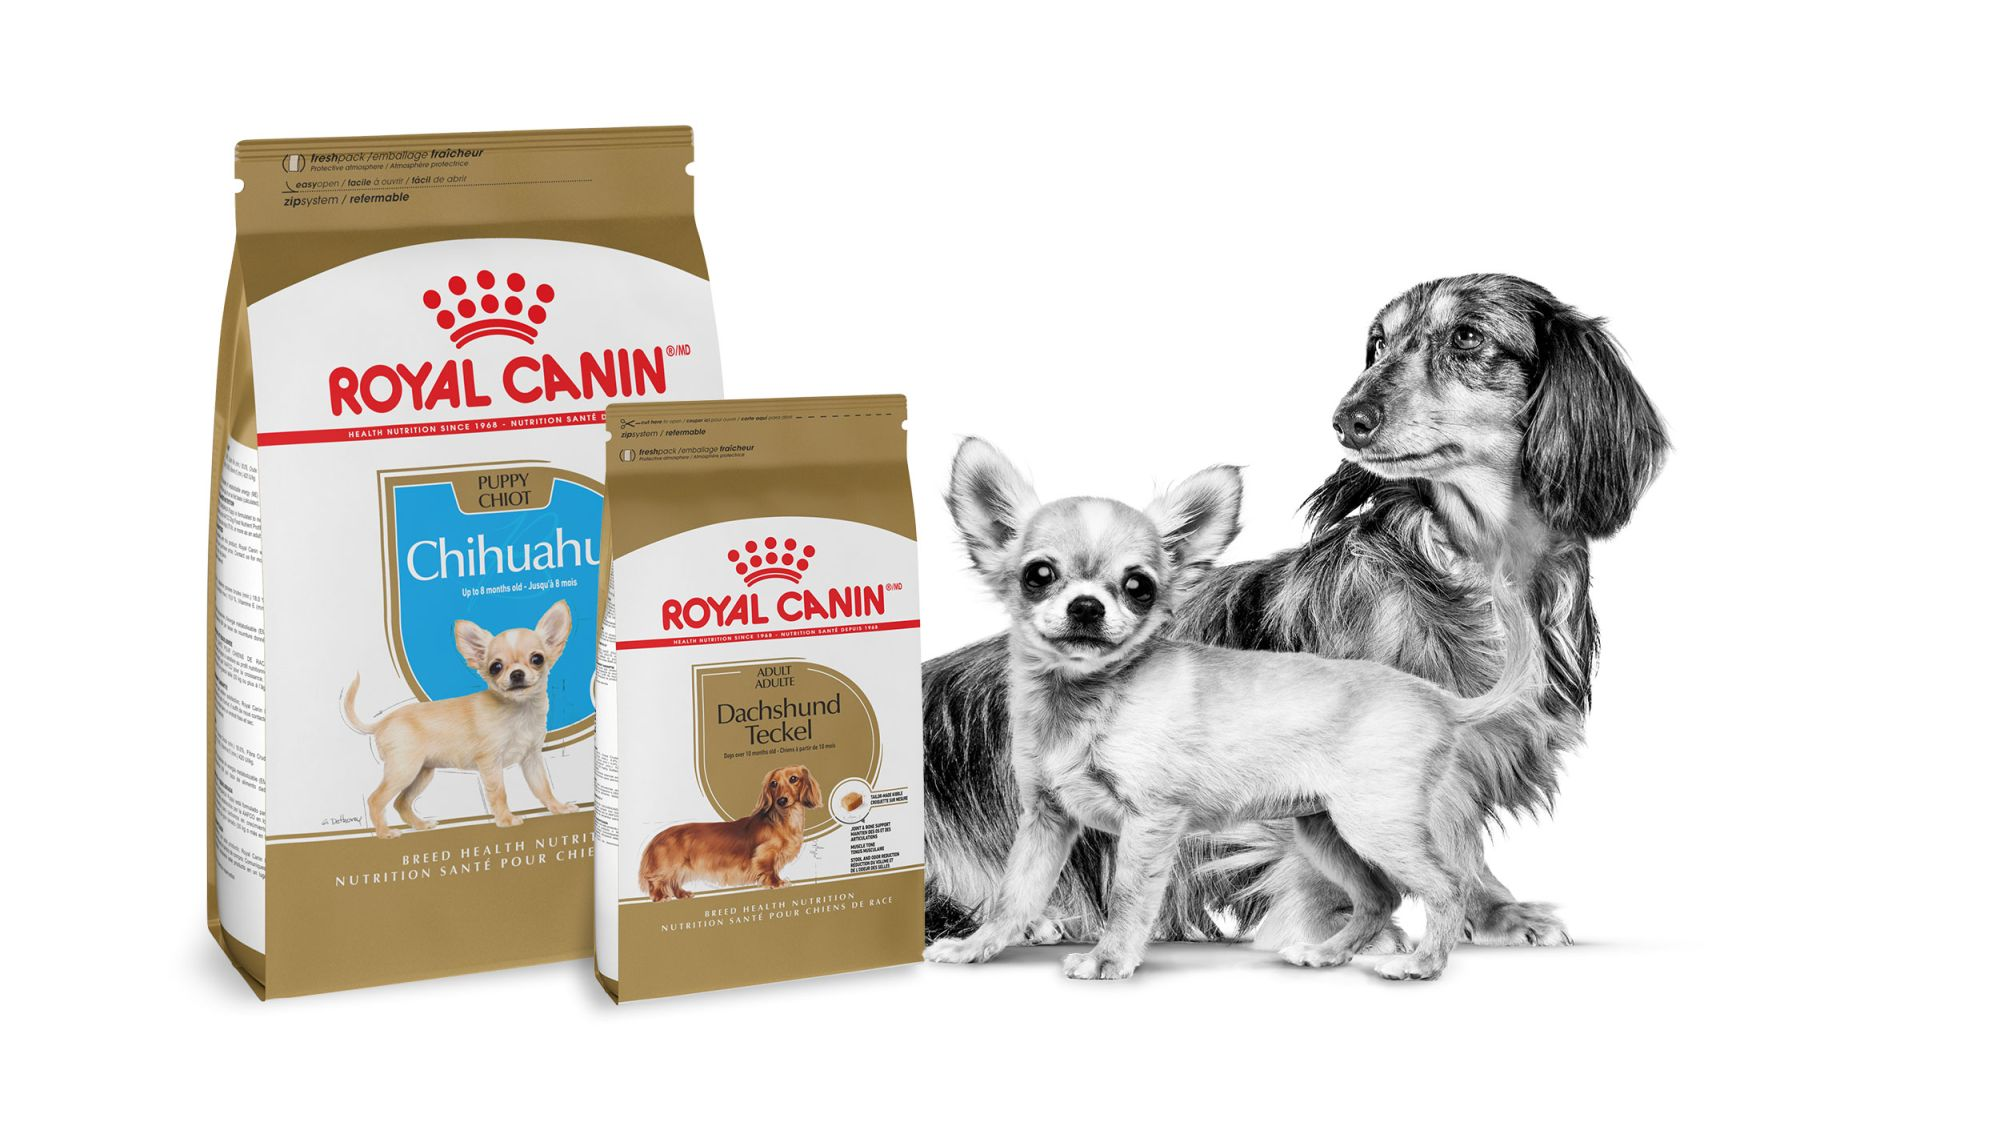 Dachshund adulto y Chihuahua cachorro en blanco y negro sobre fondo blanco. A lado del alimento Royal Canin específico para raza Dachshund adulto y Chichuahua cachorro.